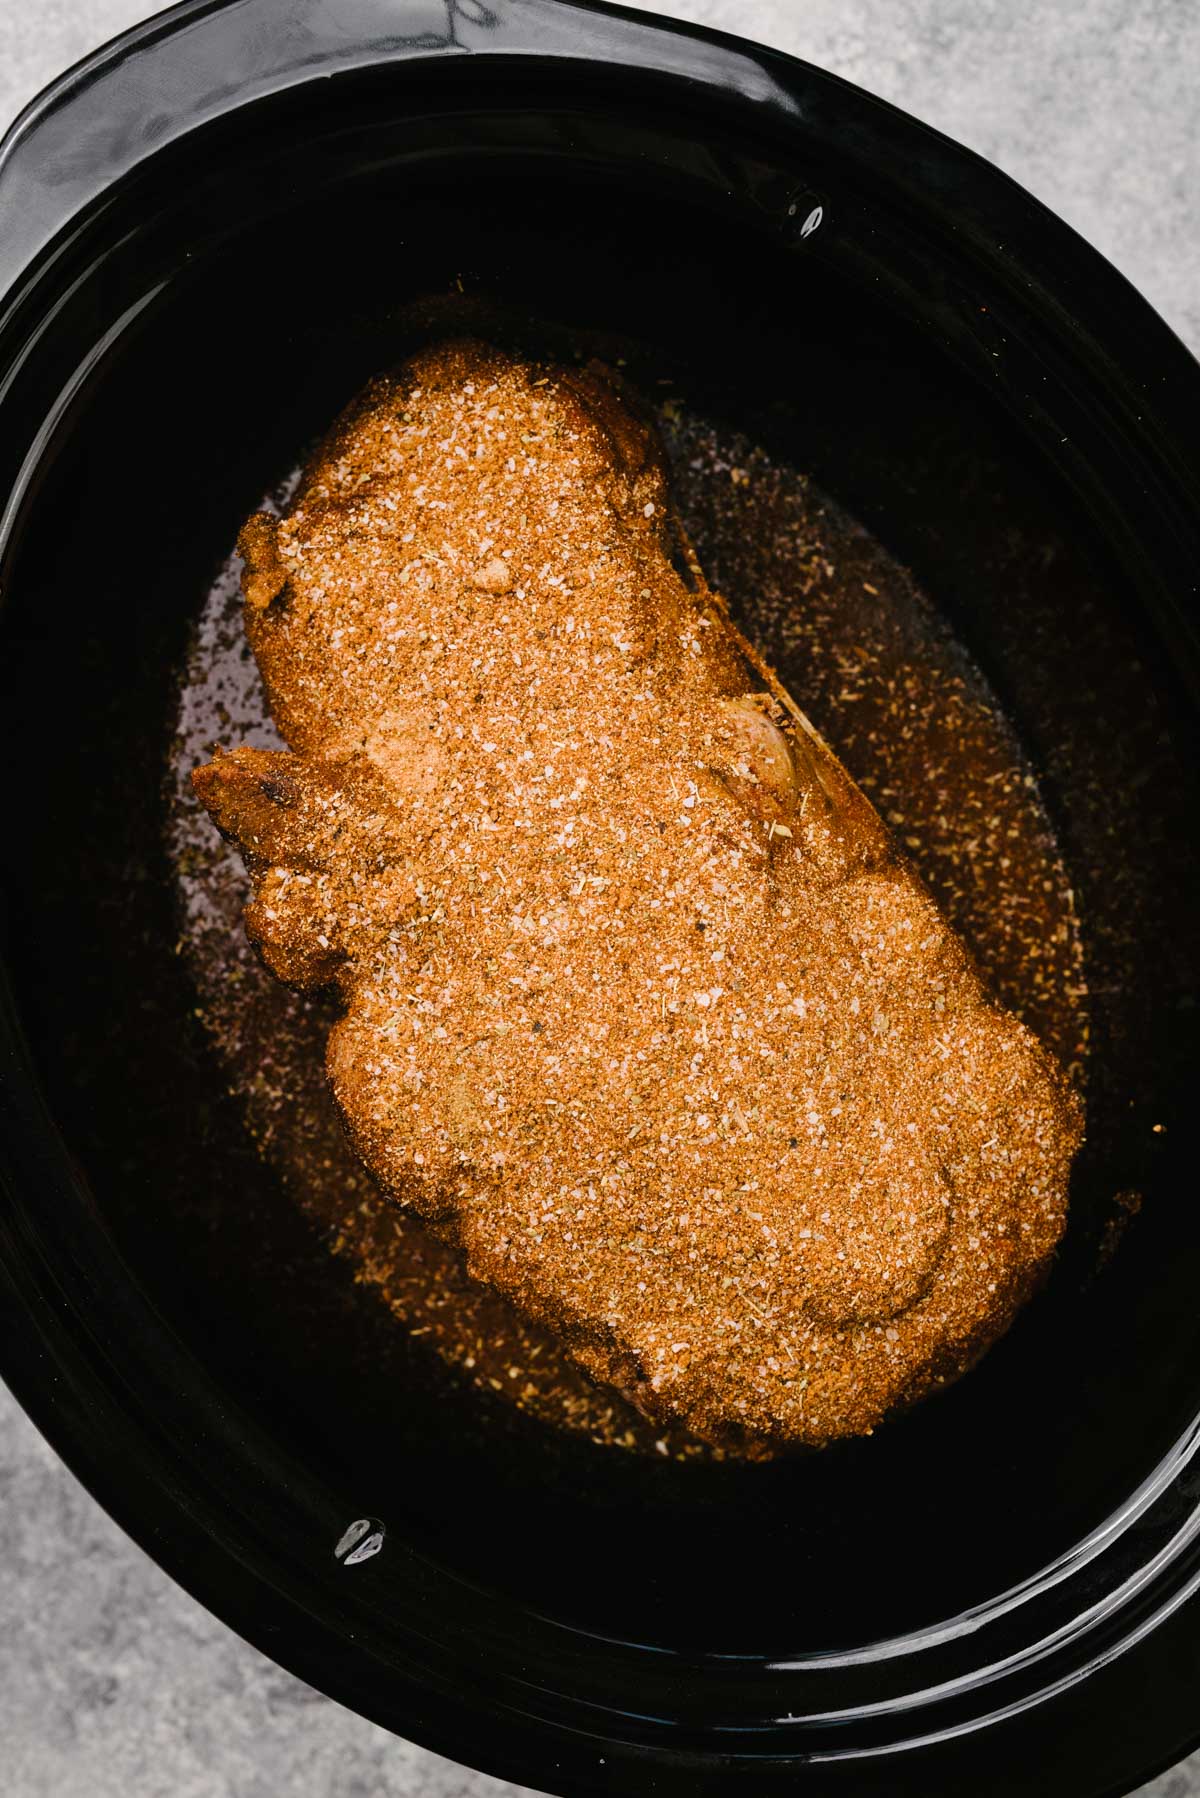 Dry rub sprinkled over a Boston butt pork roast in a crockpot.